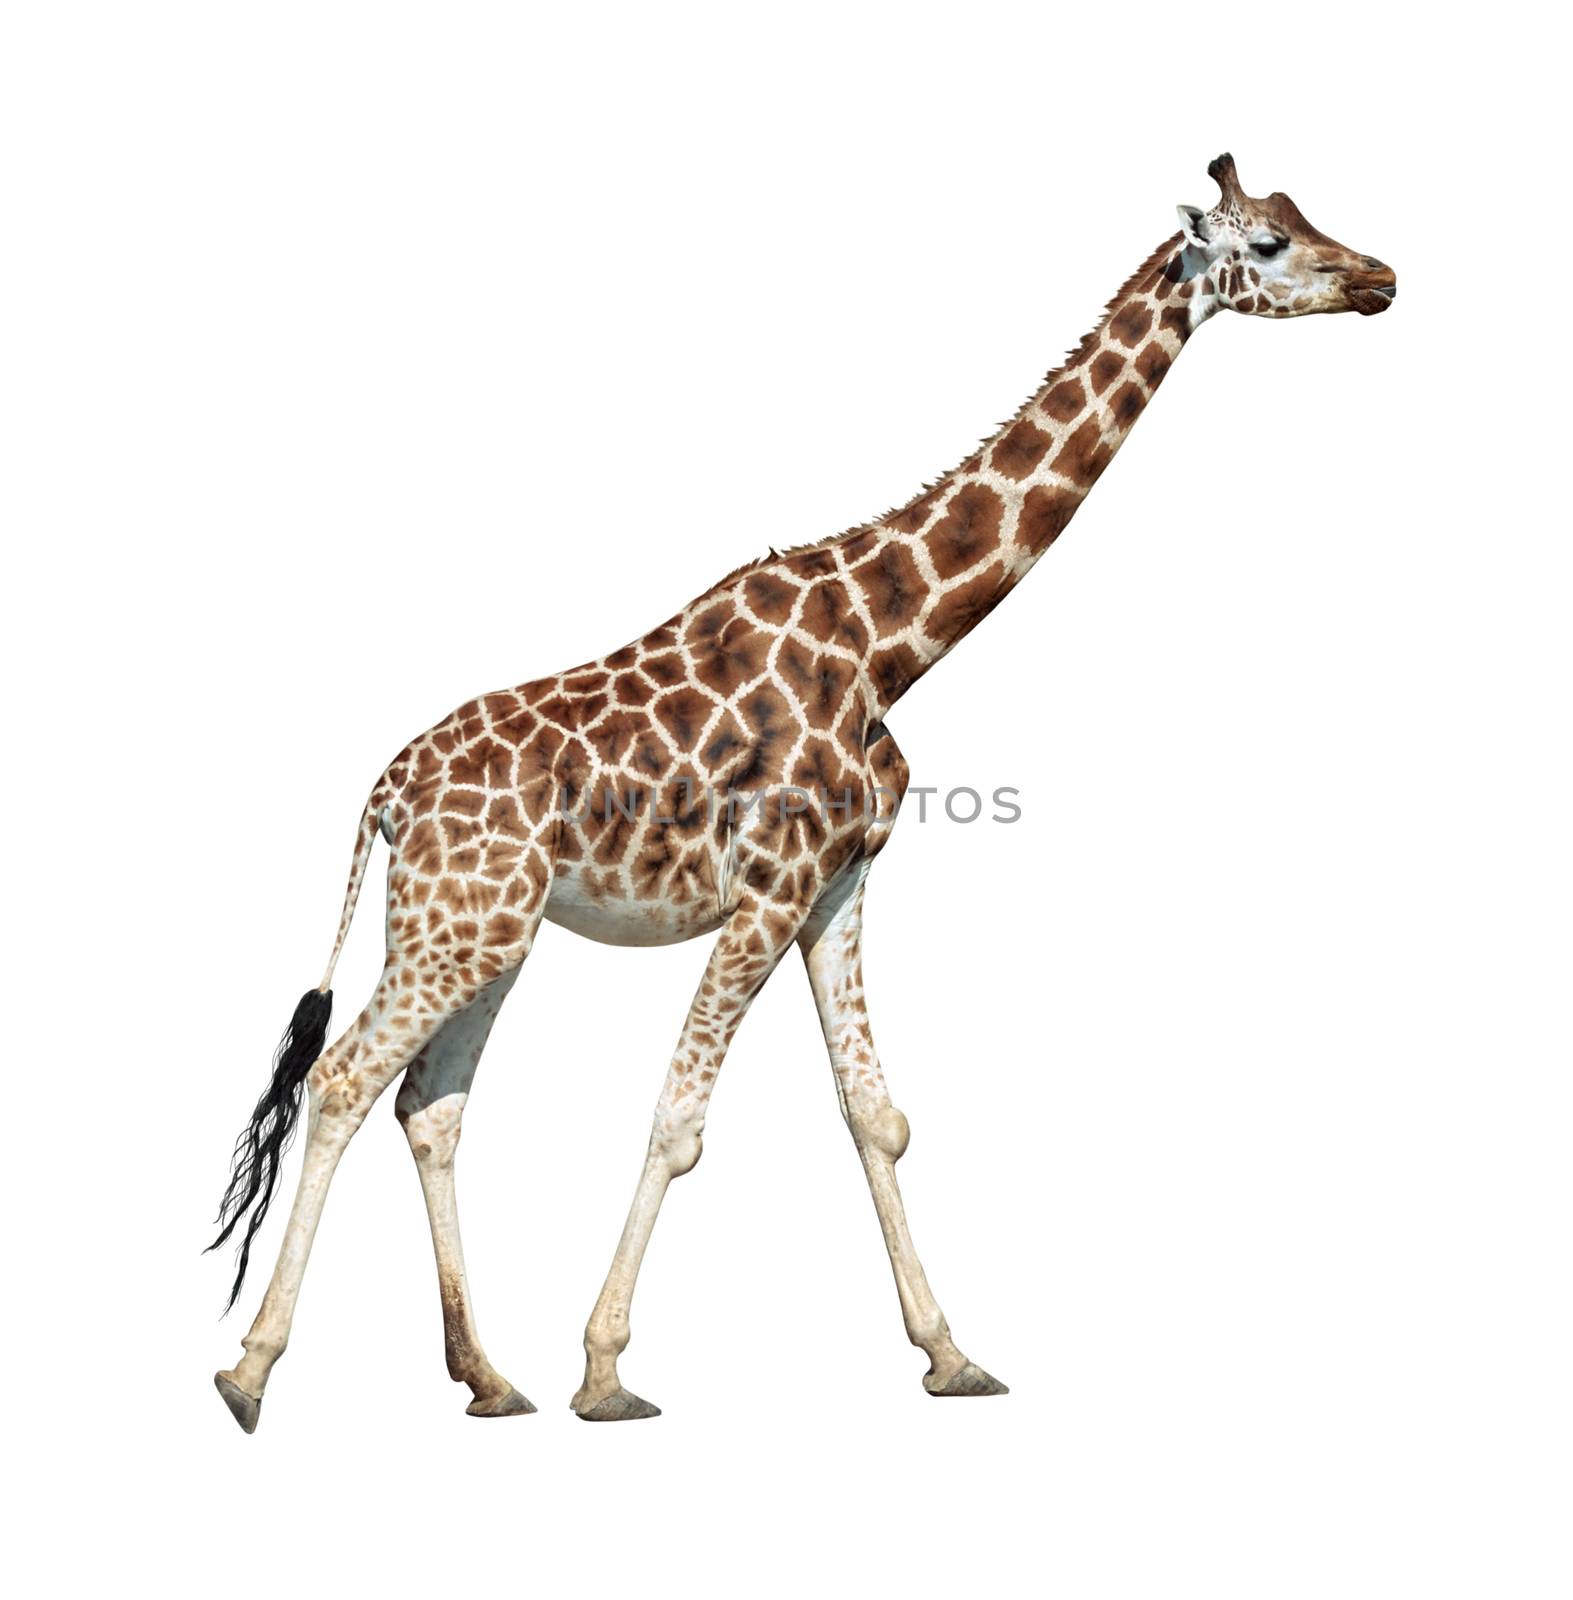 Giraffe female on move isolated on white background